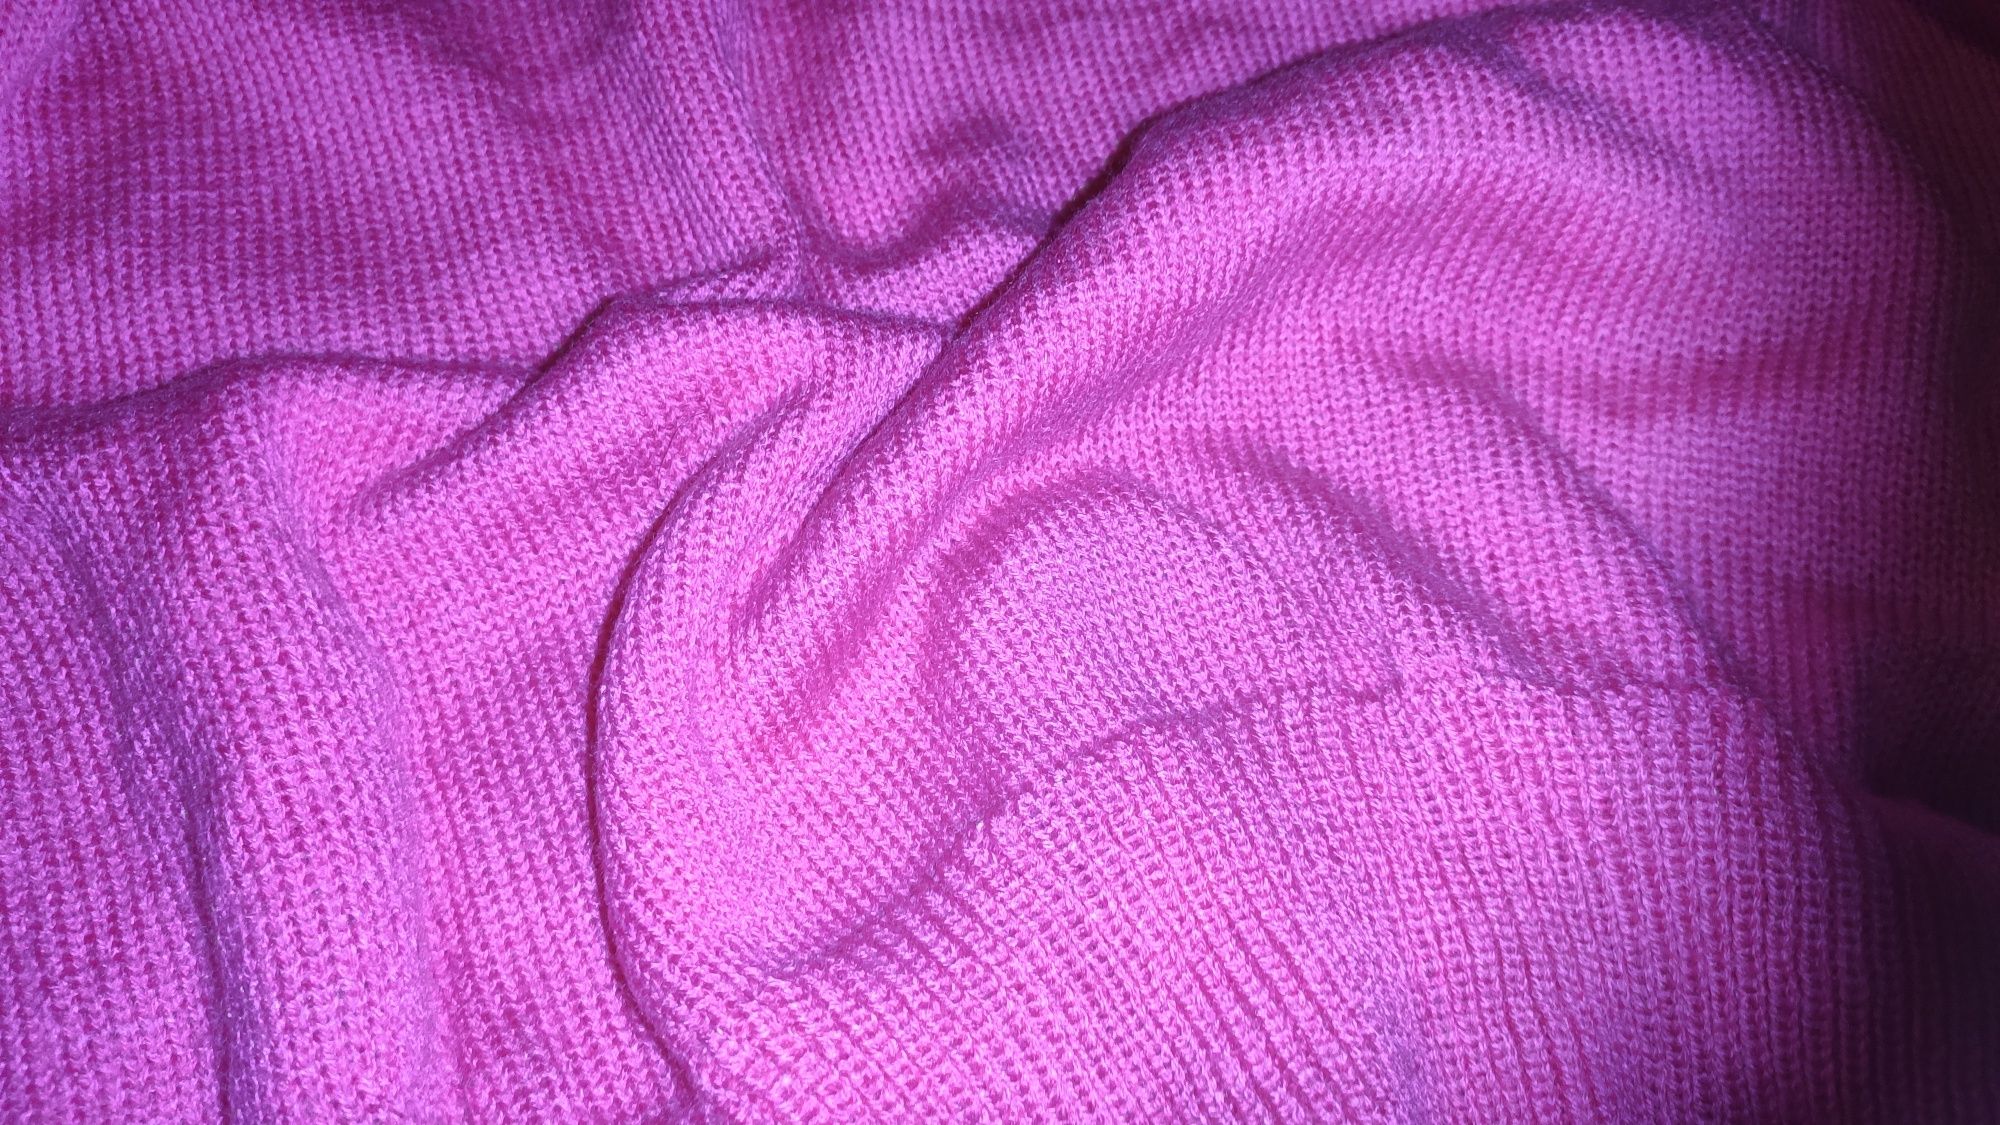 Golf sweter różowy prl retro vintage M L